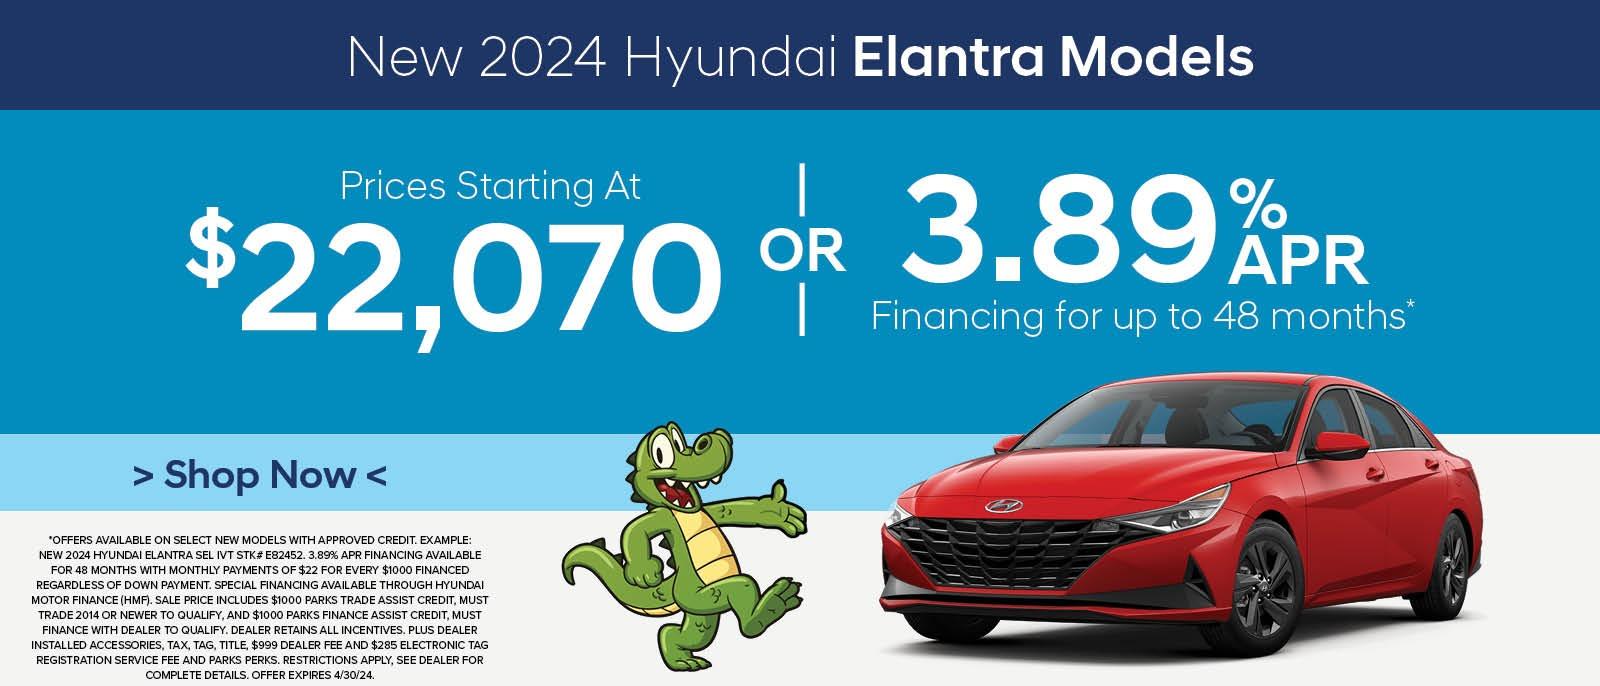 New 2024 Hyundai Elantra Models